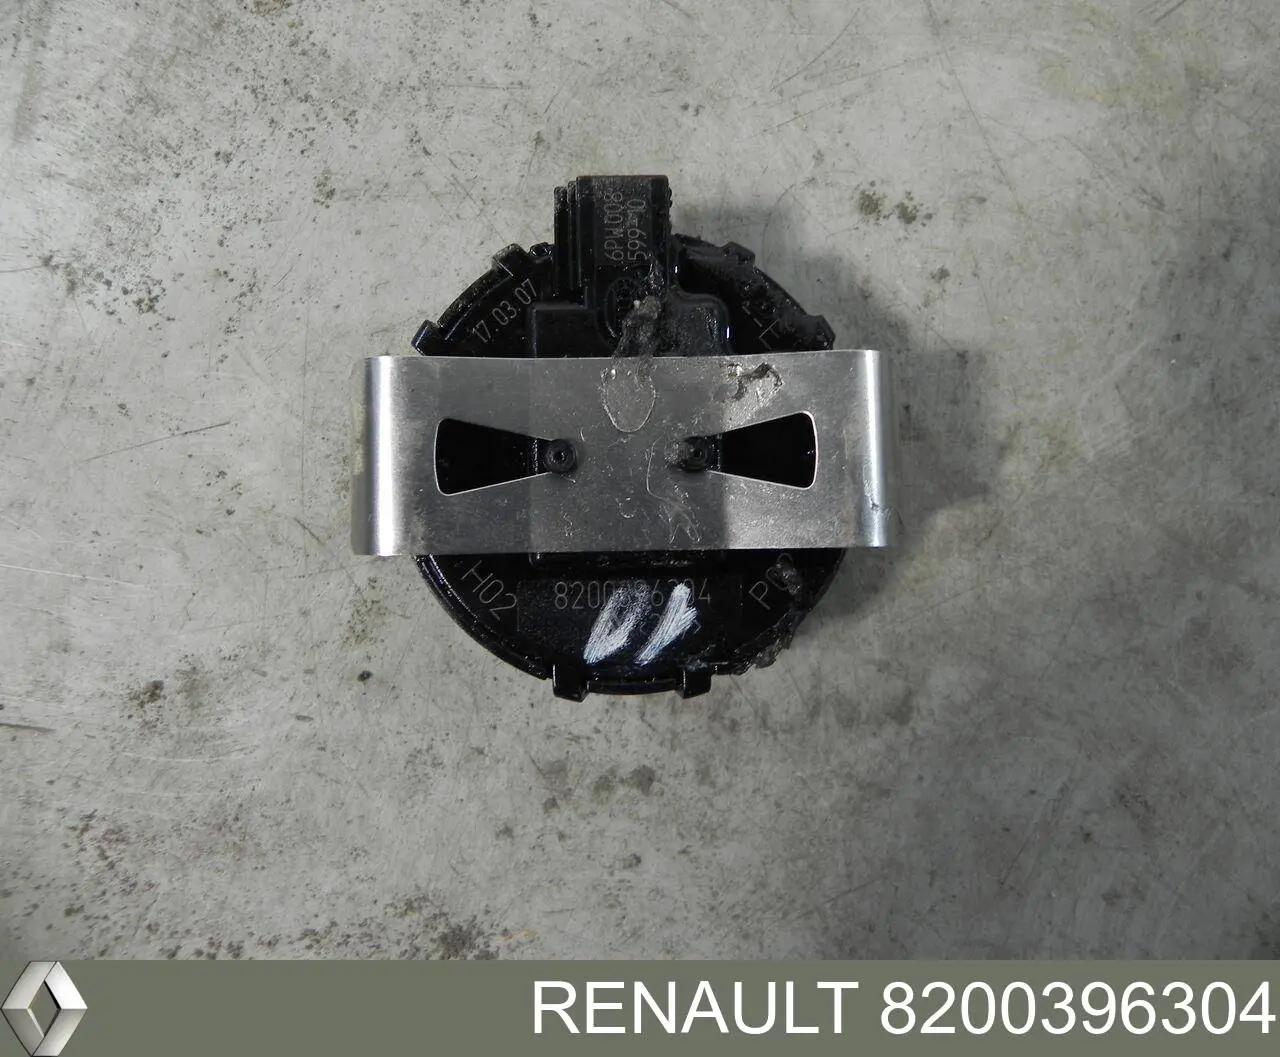 8200396304 Renault (RVI) sensor de chuva